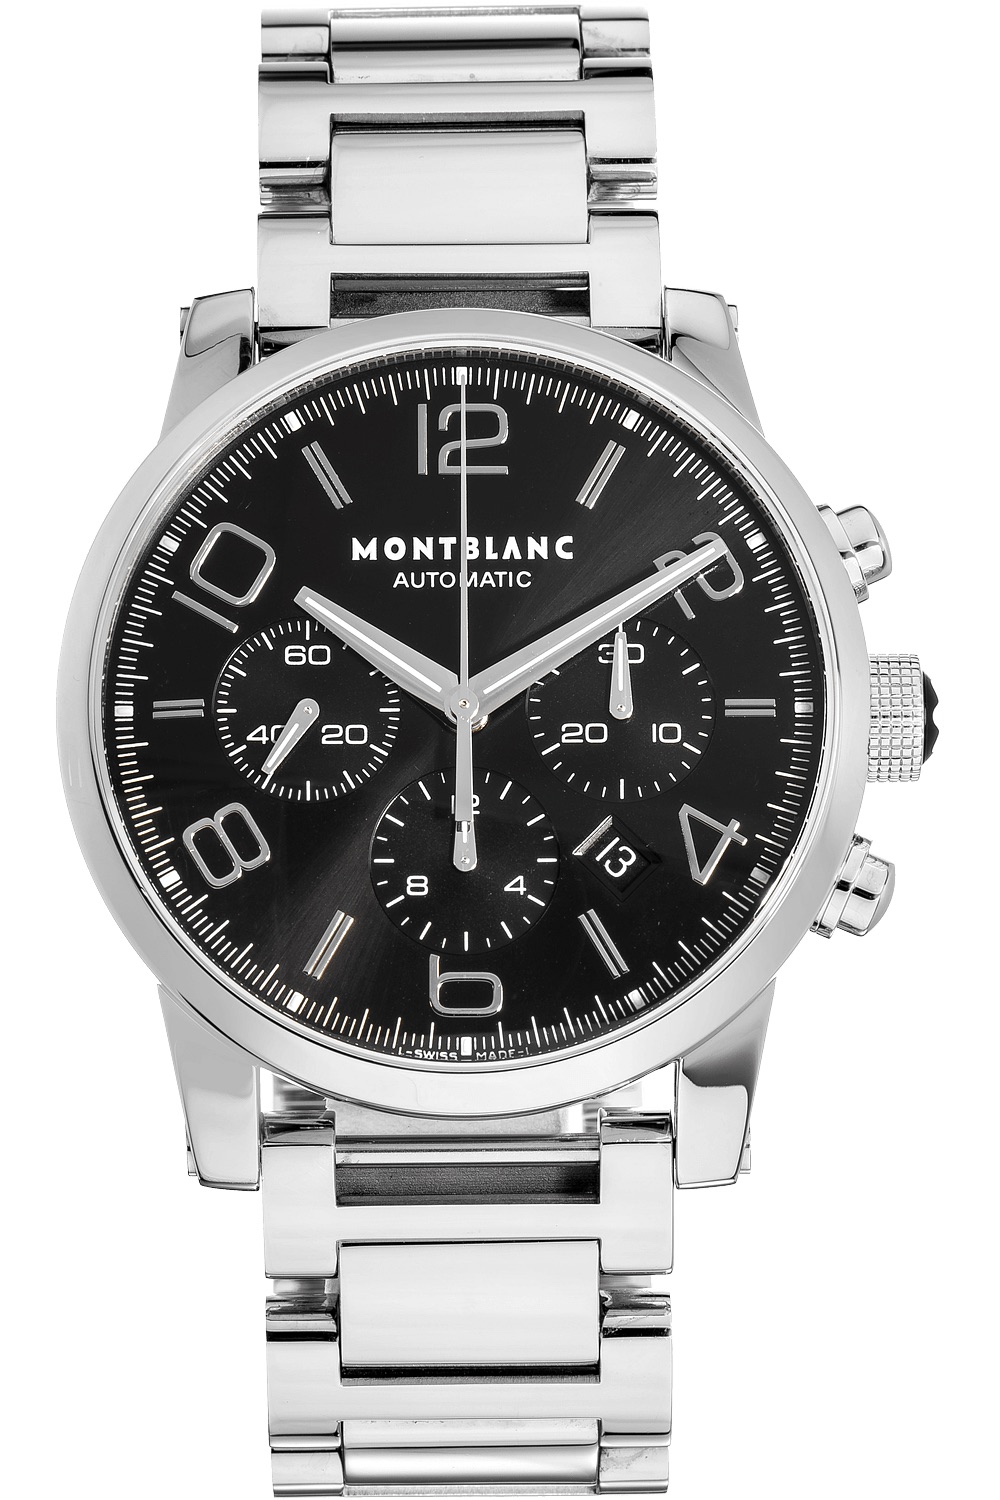 Монблан часы мужские. Часы Montblanc 7141. Montblanc часы мужские Timewalker. Часы Montblanc Chronograph 9168. Часы Montblanc 4810 501 7069.